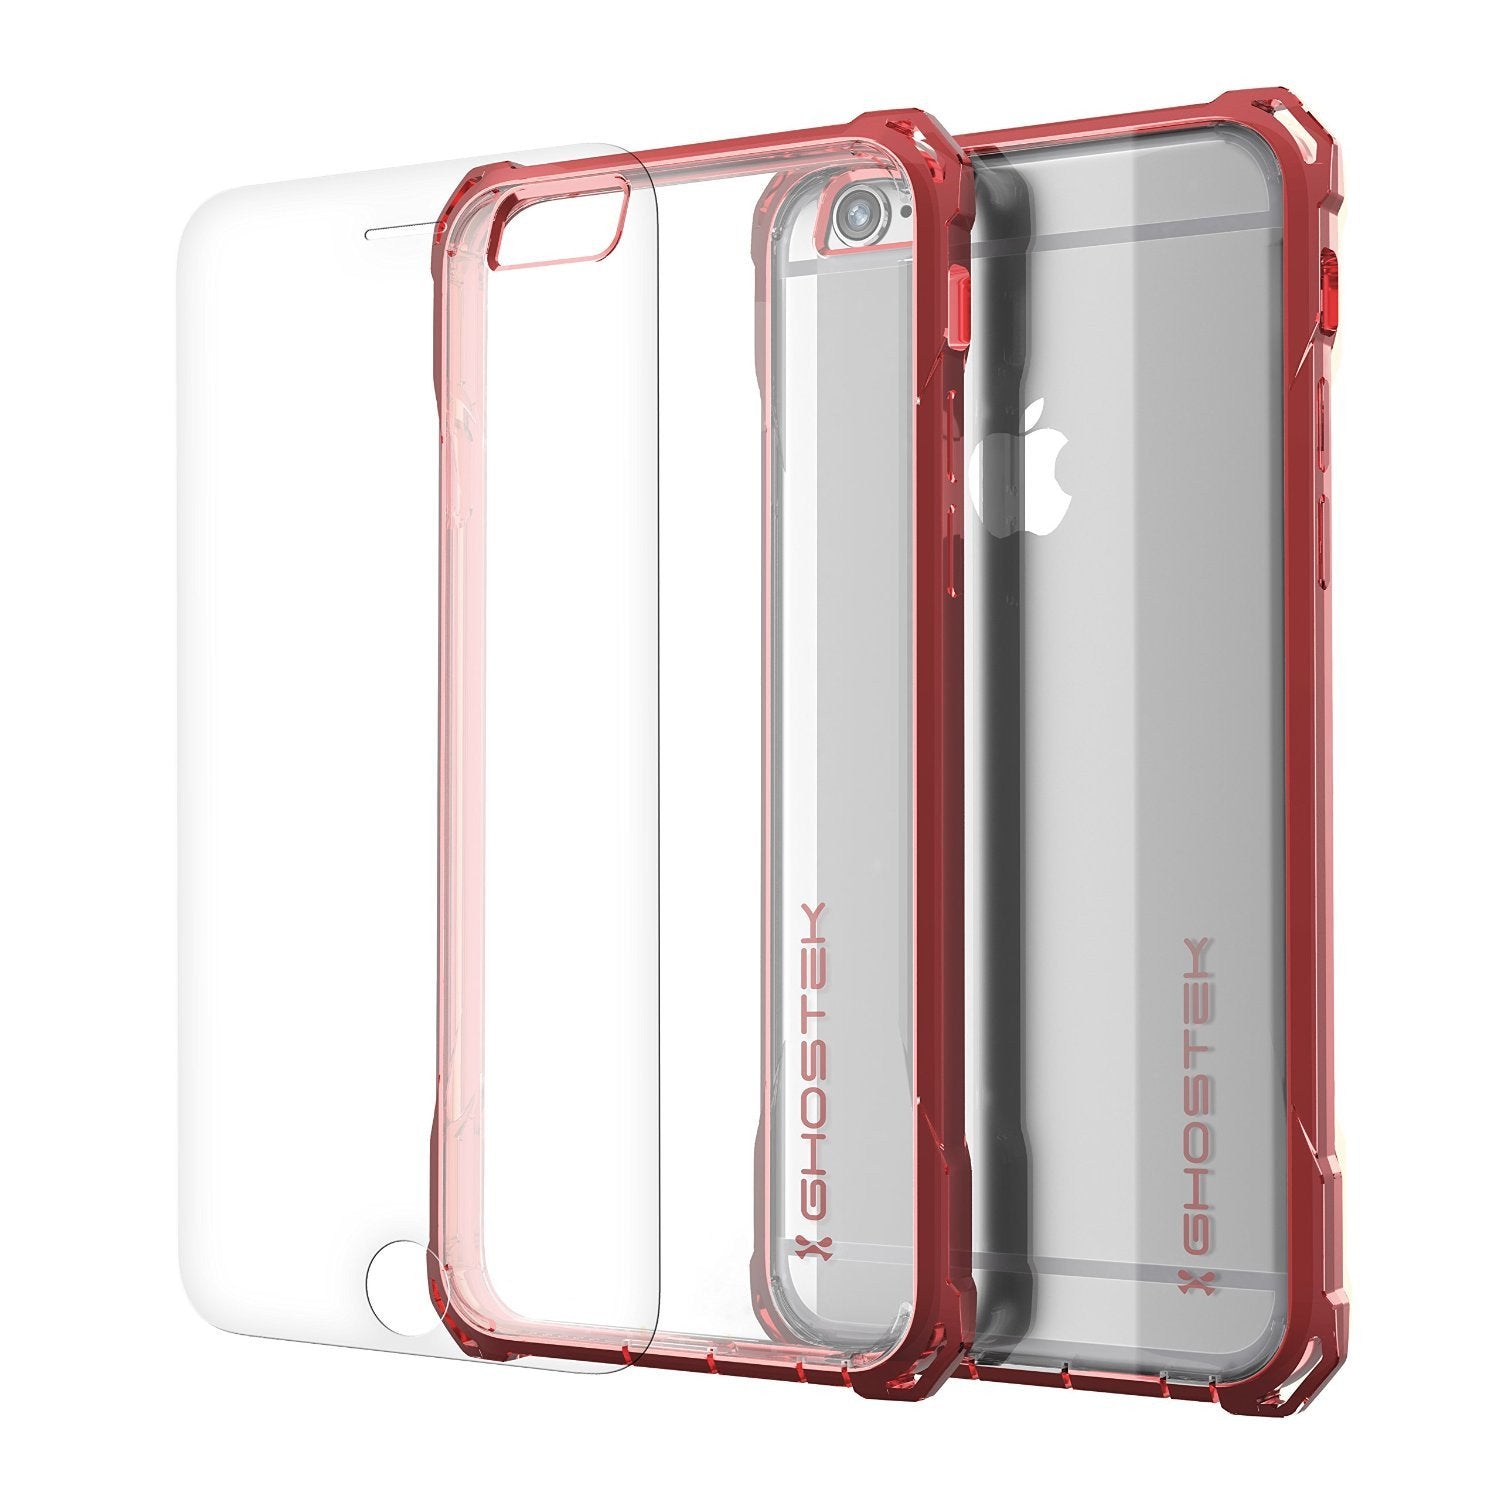 iPhone 6S Case, Ghostek® Covert Rose Pink, Premium Armor | Lifetime Warranty Exchange